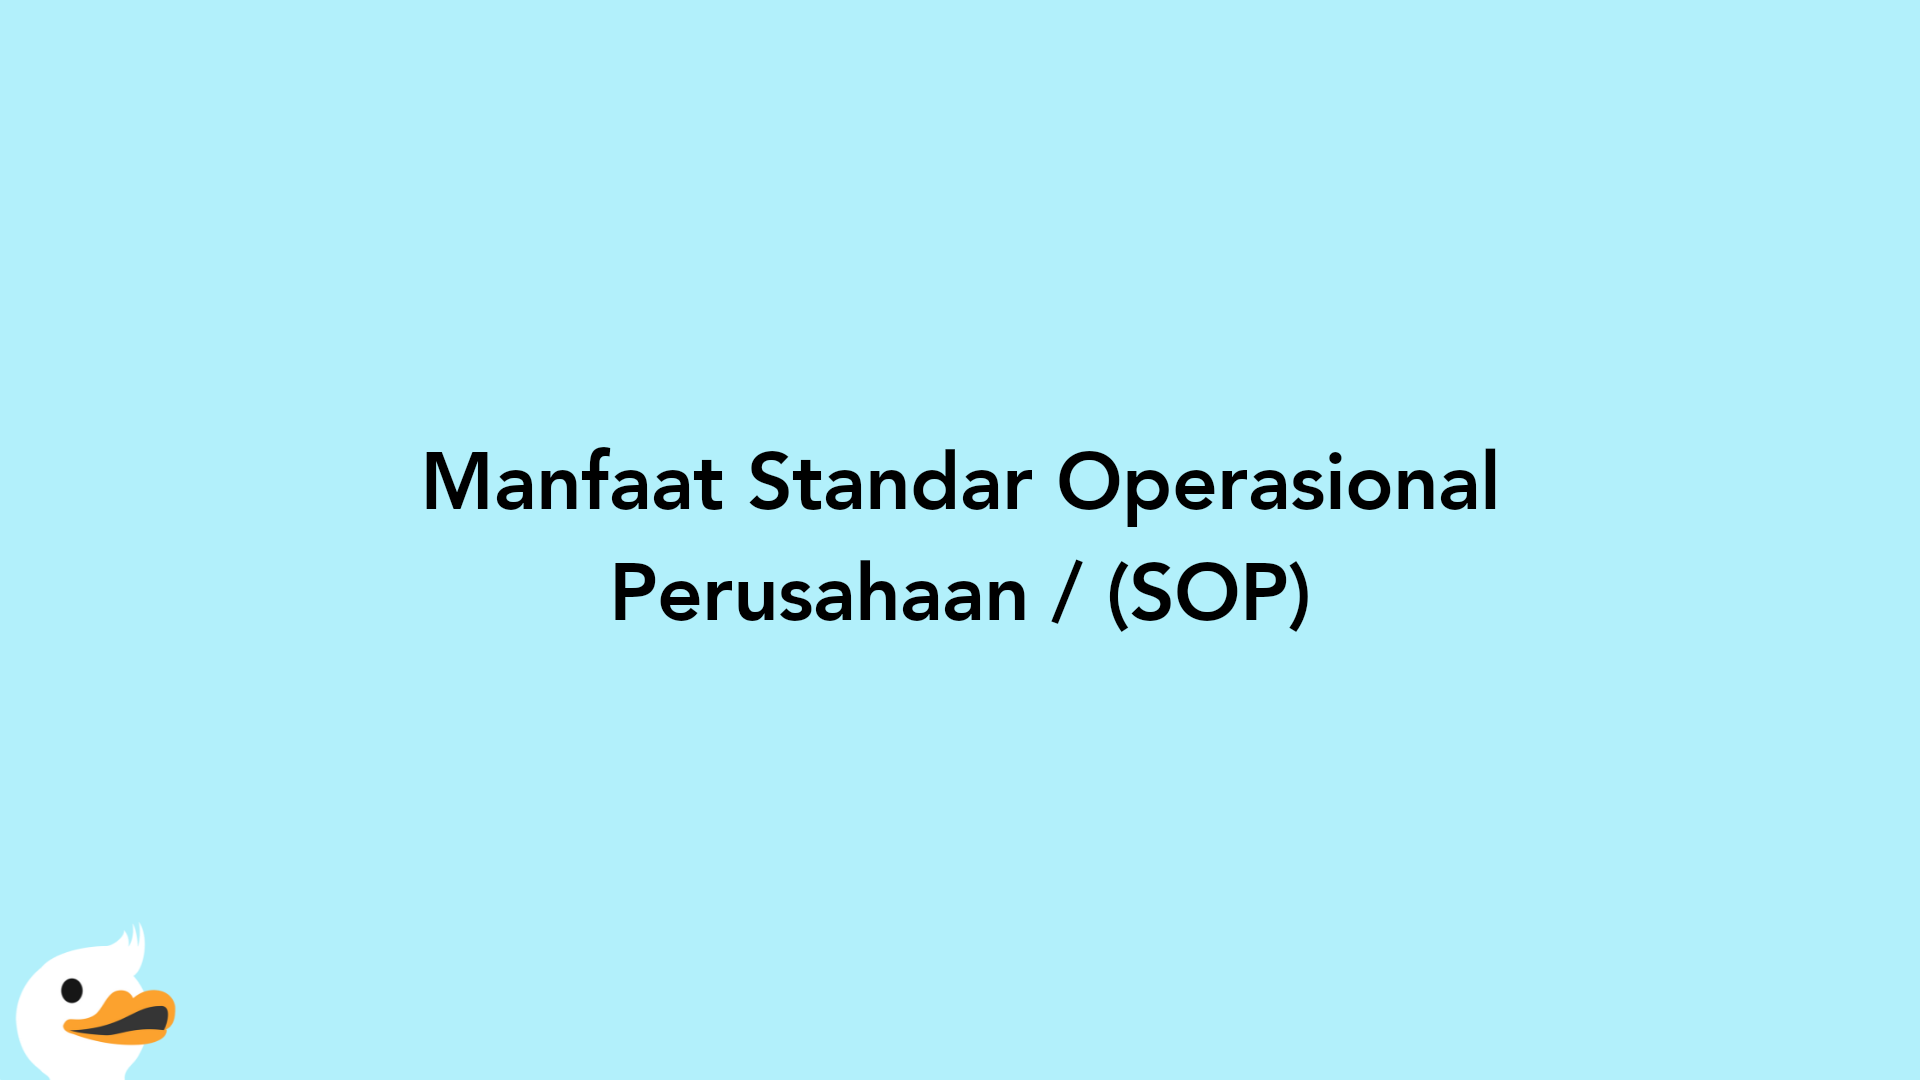 Manfaat Standar Operasional Perusahaan / (SOP)